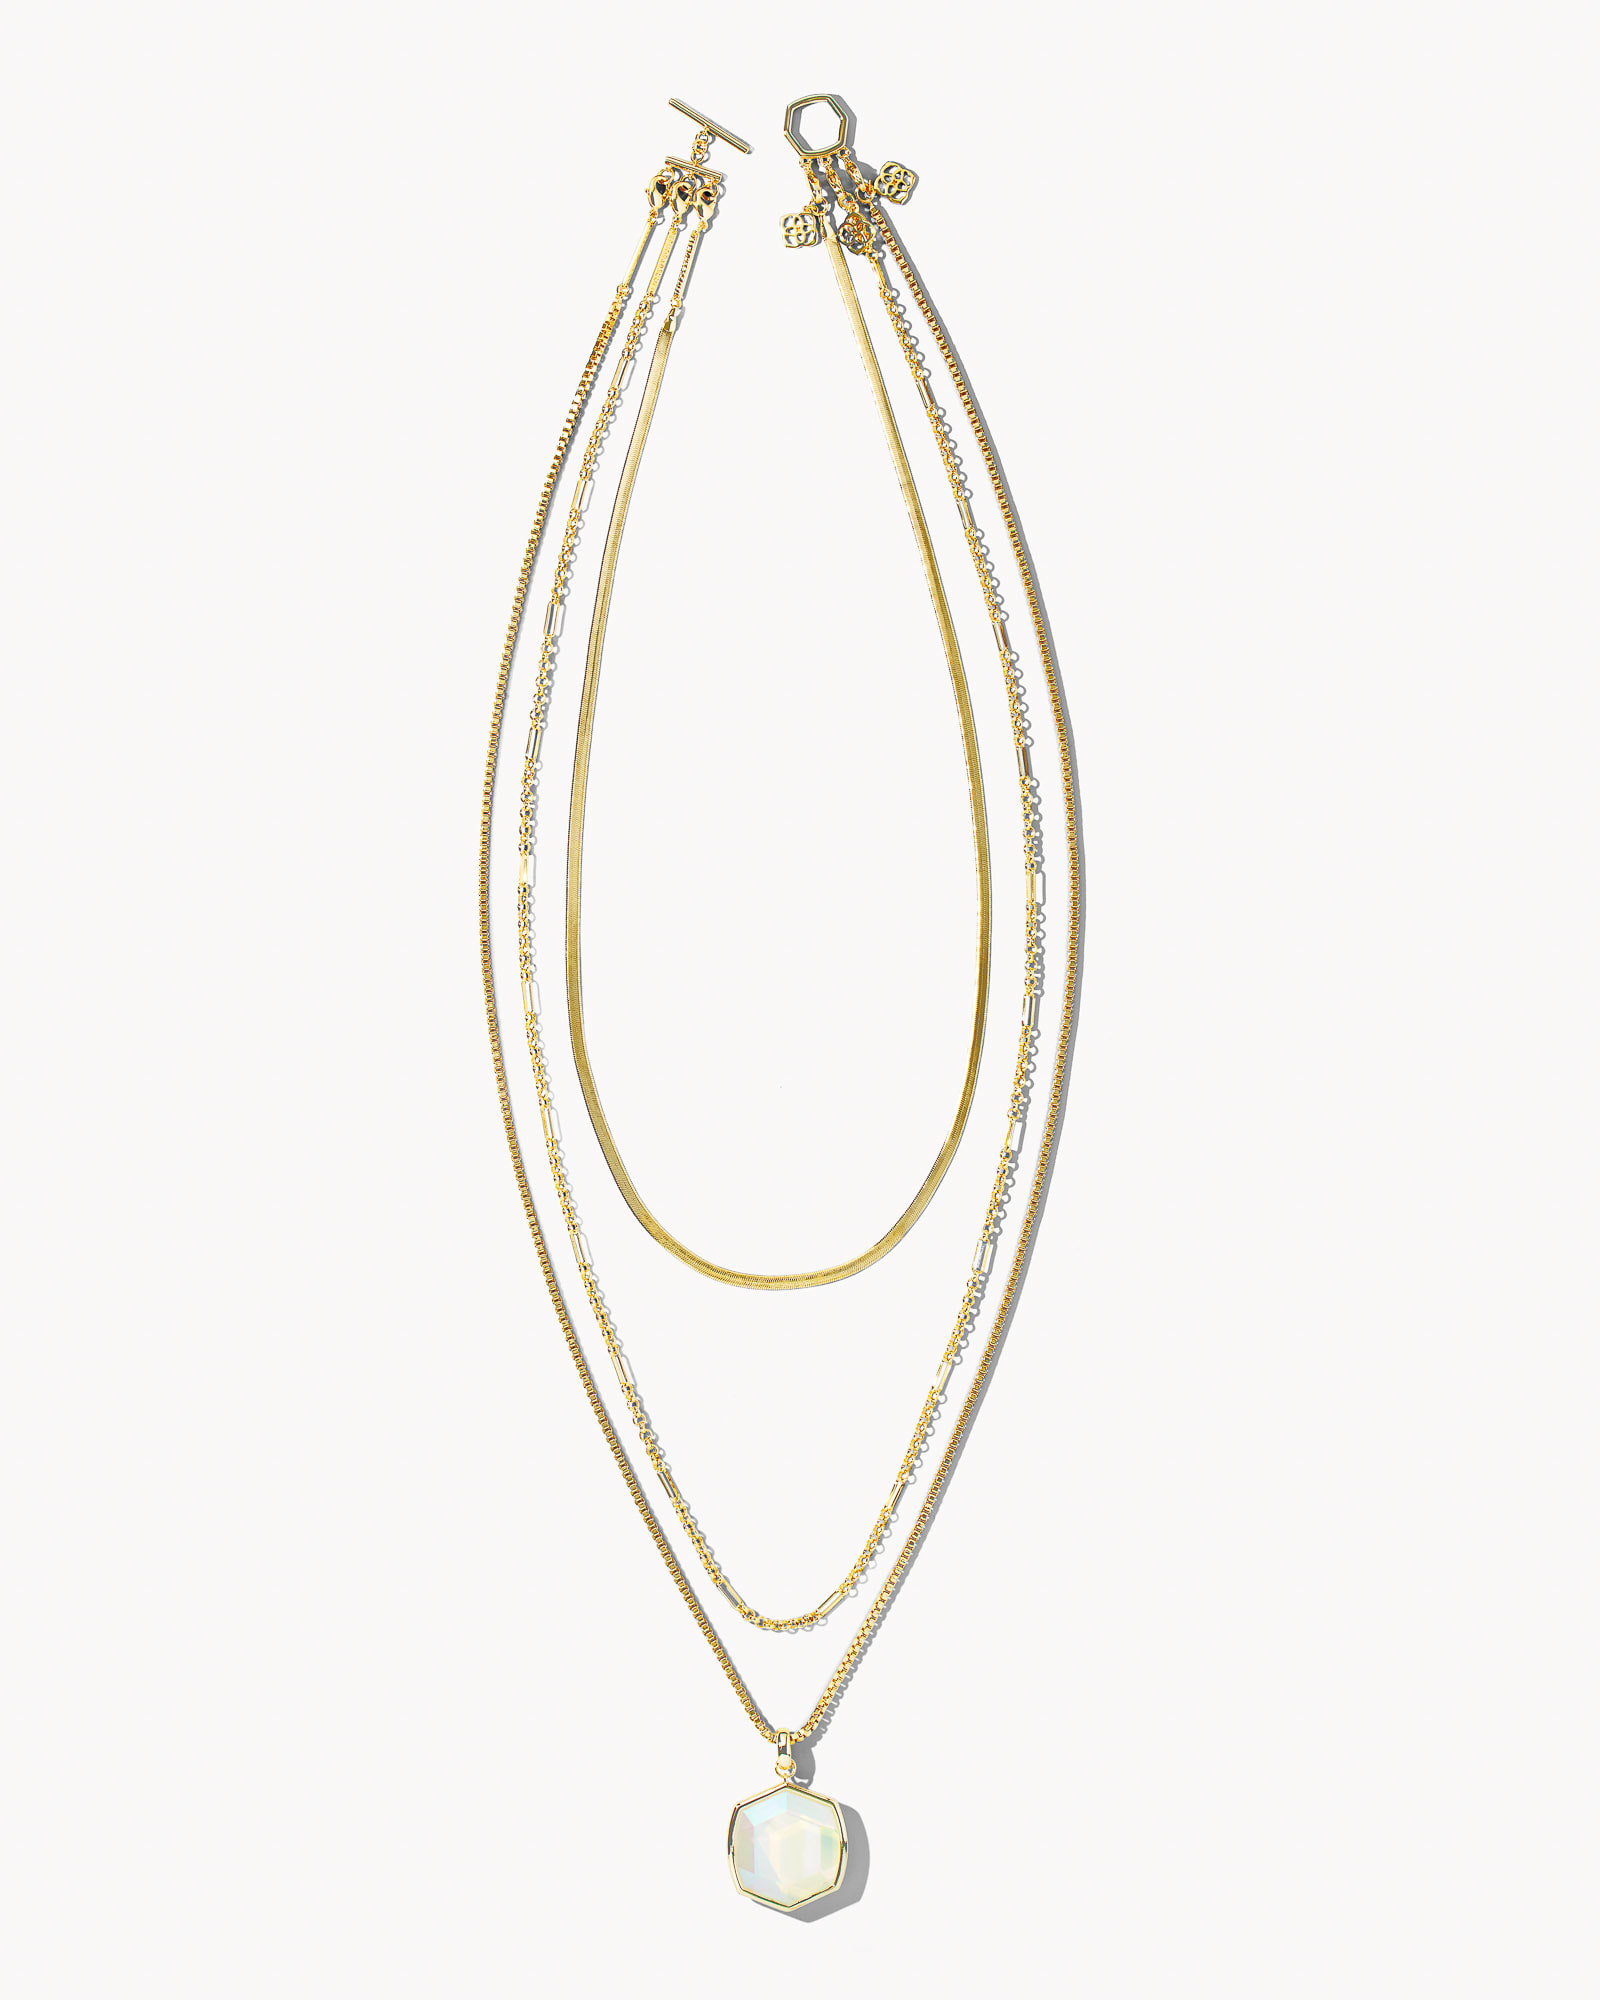 Davis Gold Chain Triple Strand Necklace in Iridescent Opalite